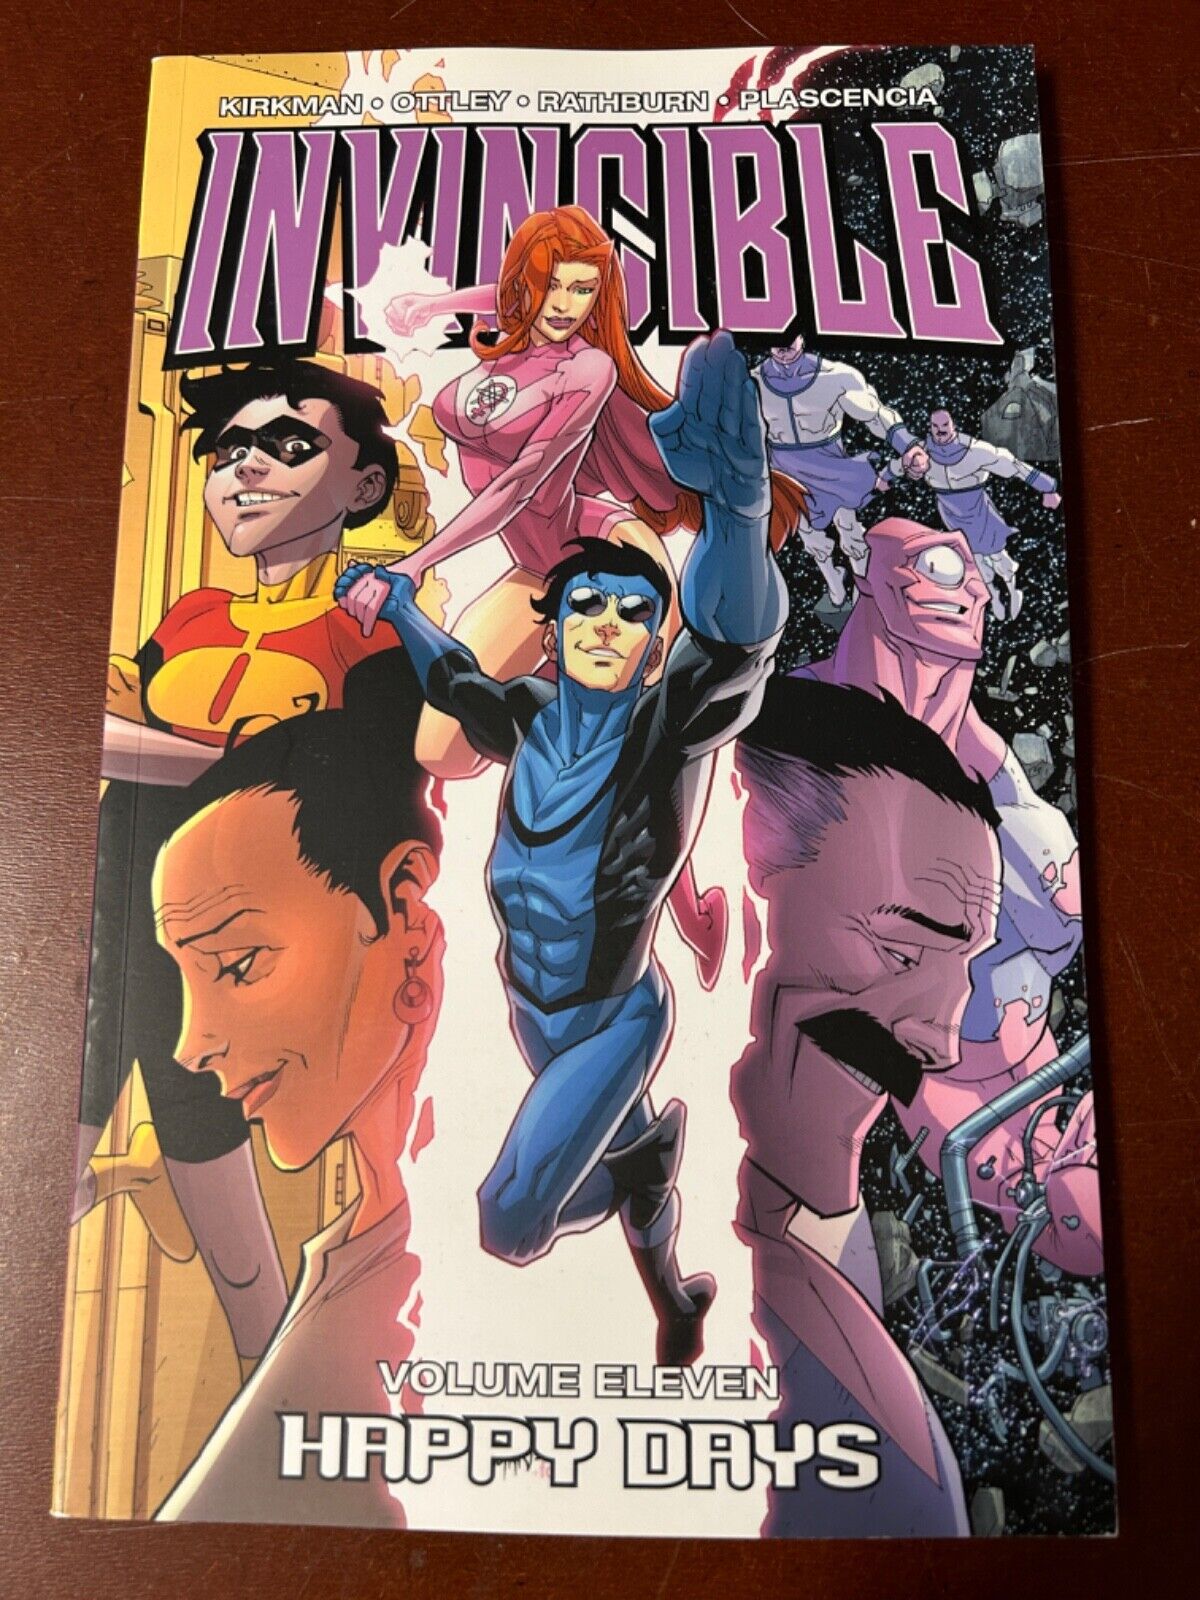 Invincible #11 (Image Comics, 2009) Happy Days